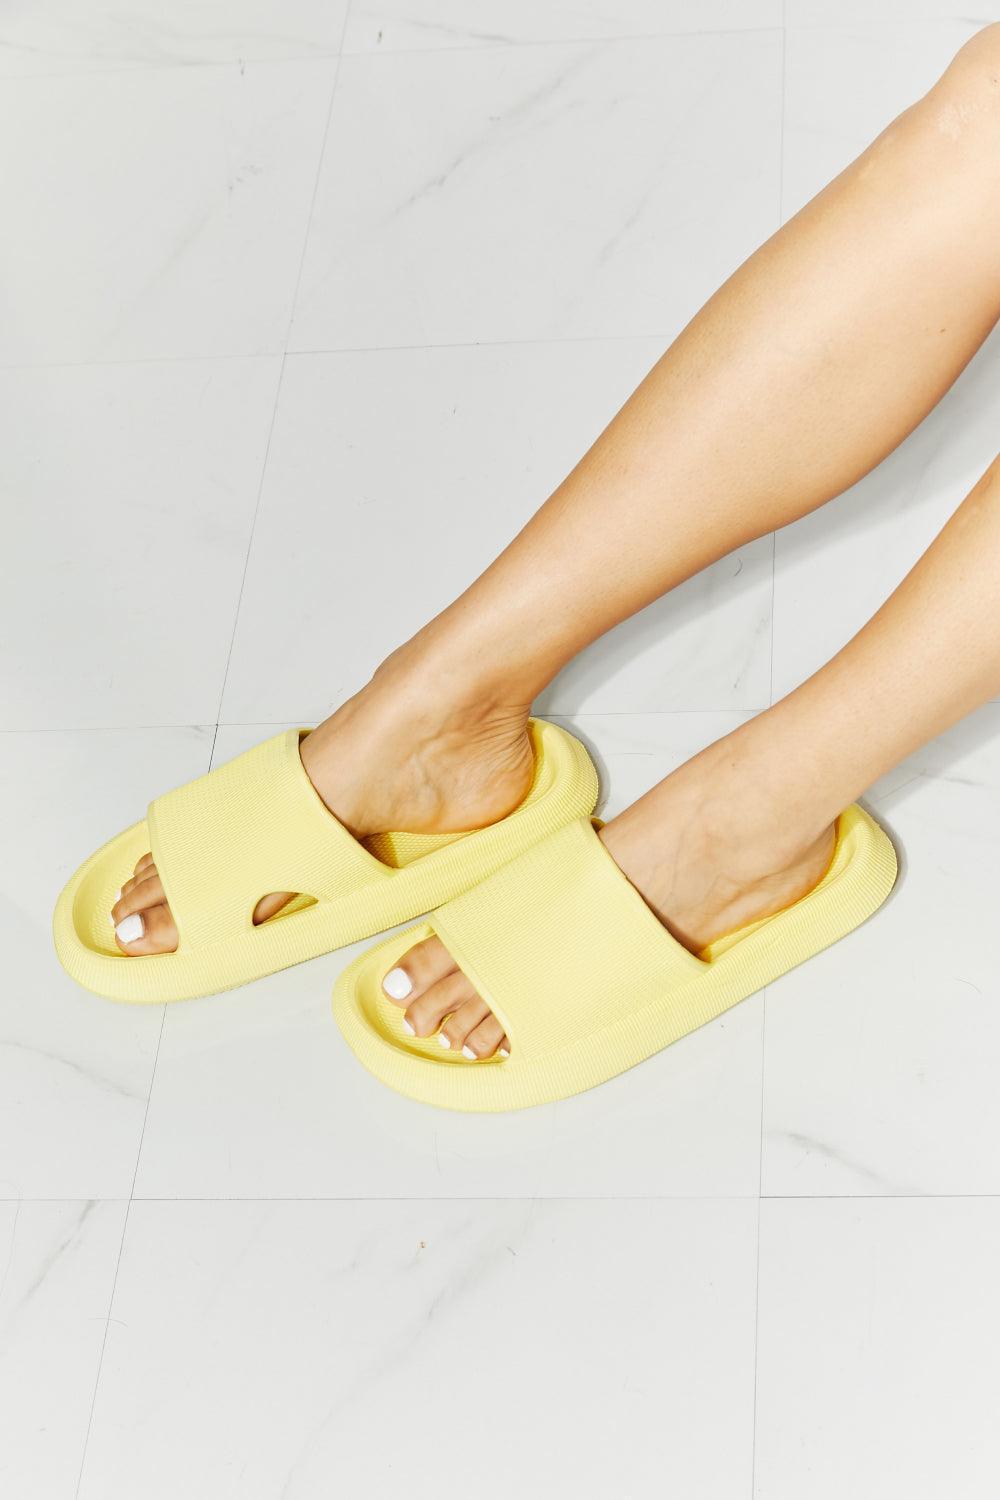 MMShoes Secure Fit Open Toe Yellow Rubber Slides - MXSTUDIO.COM